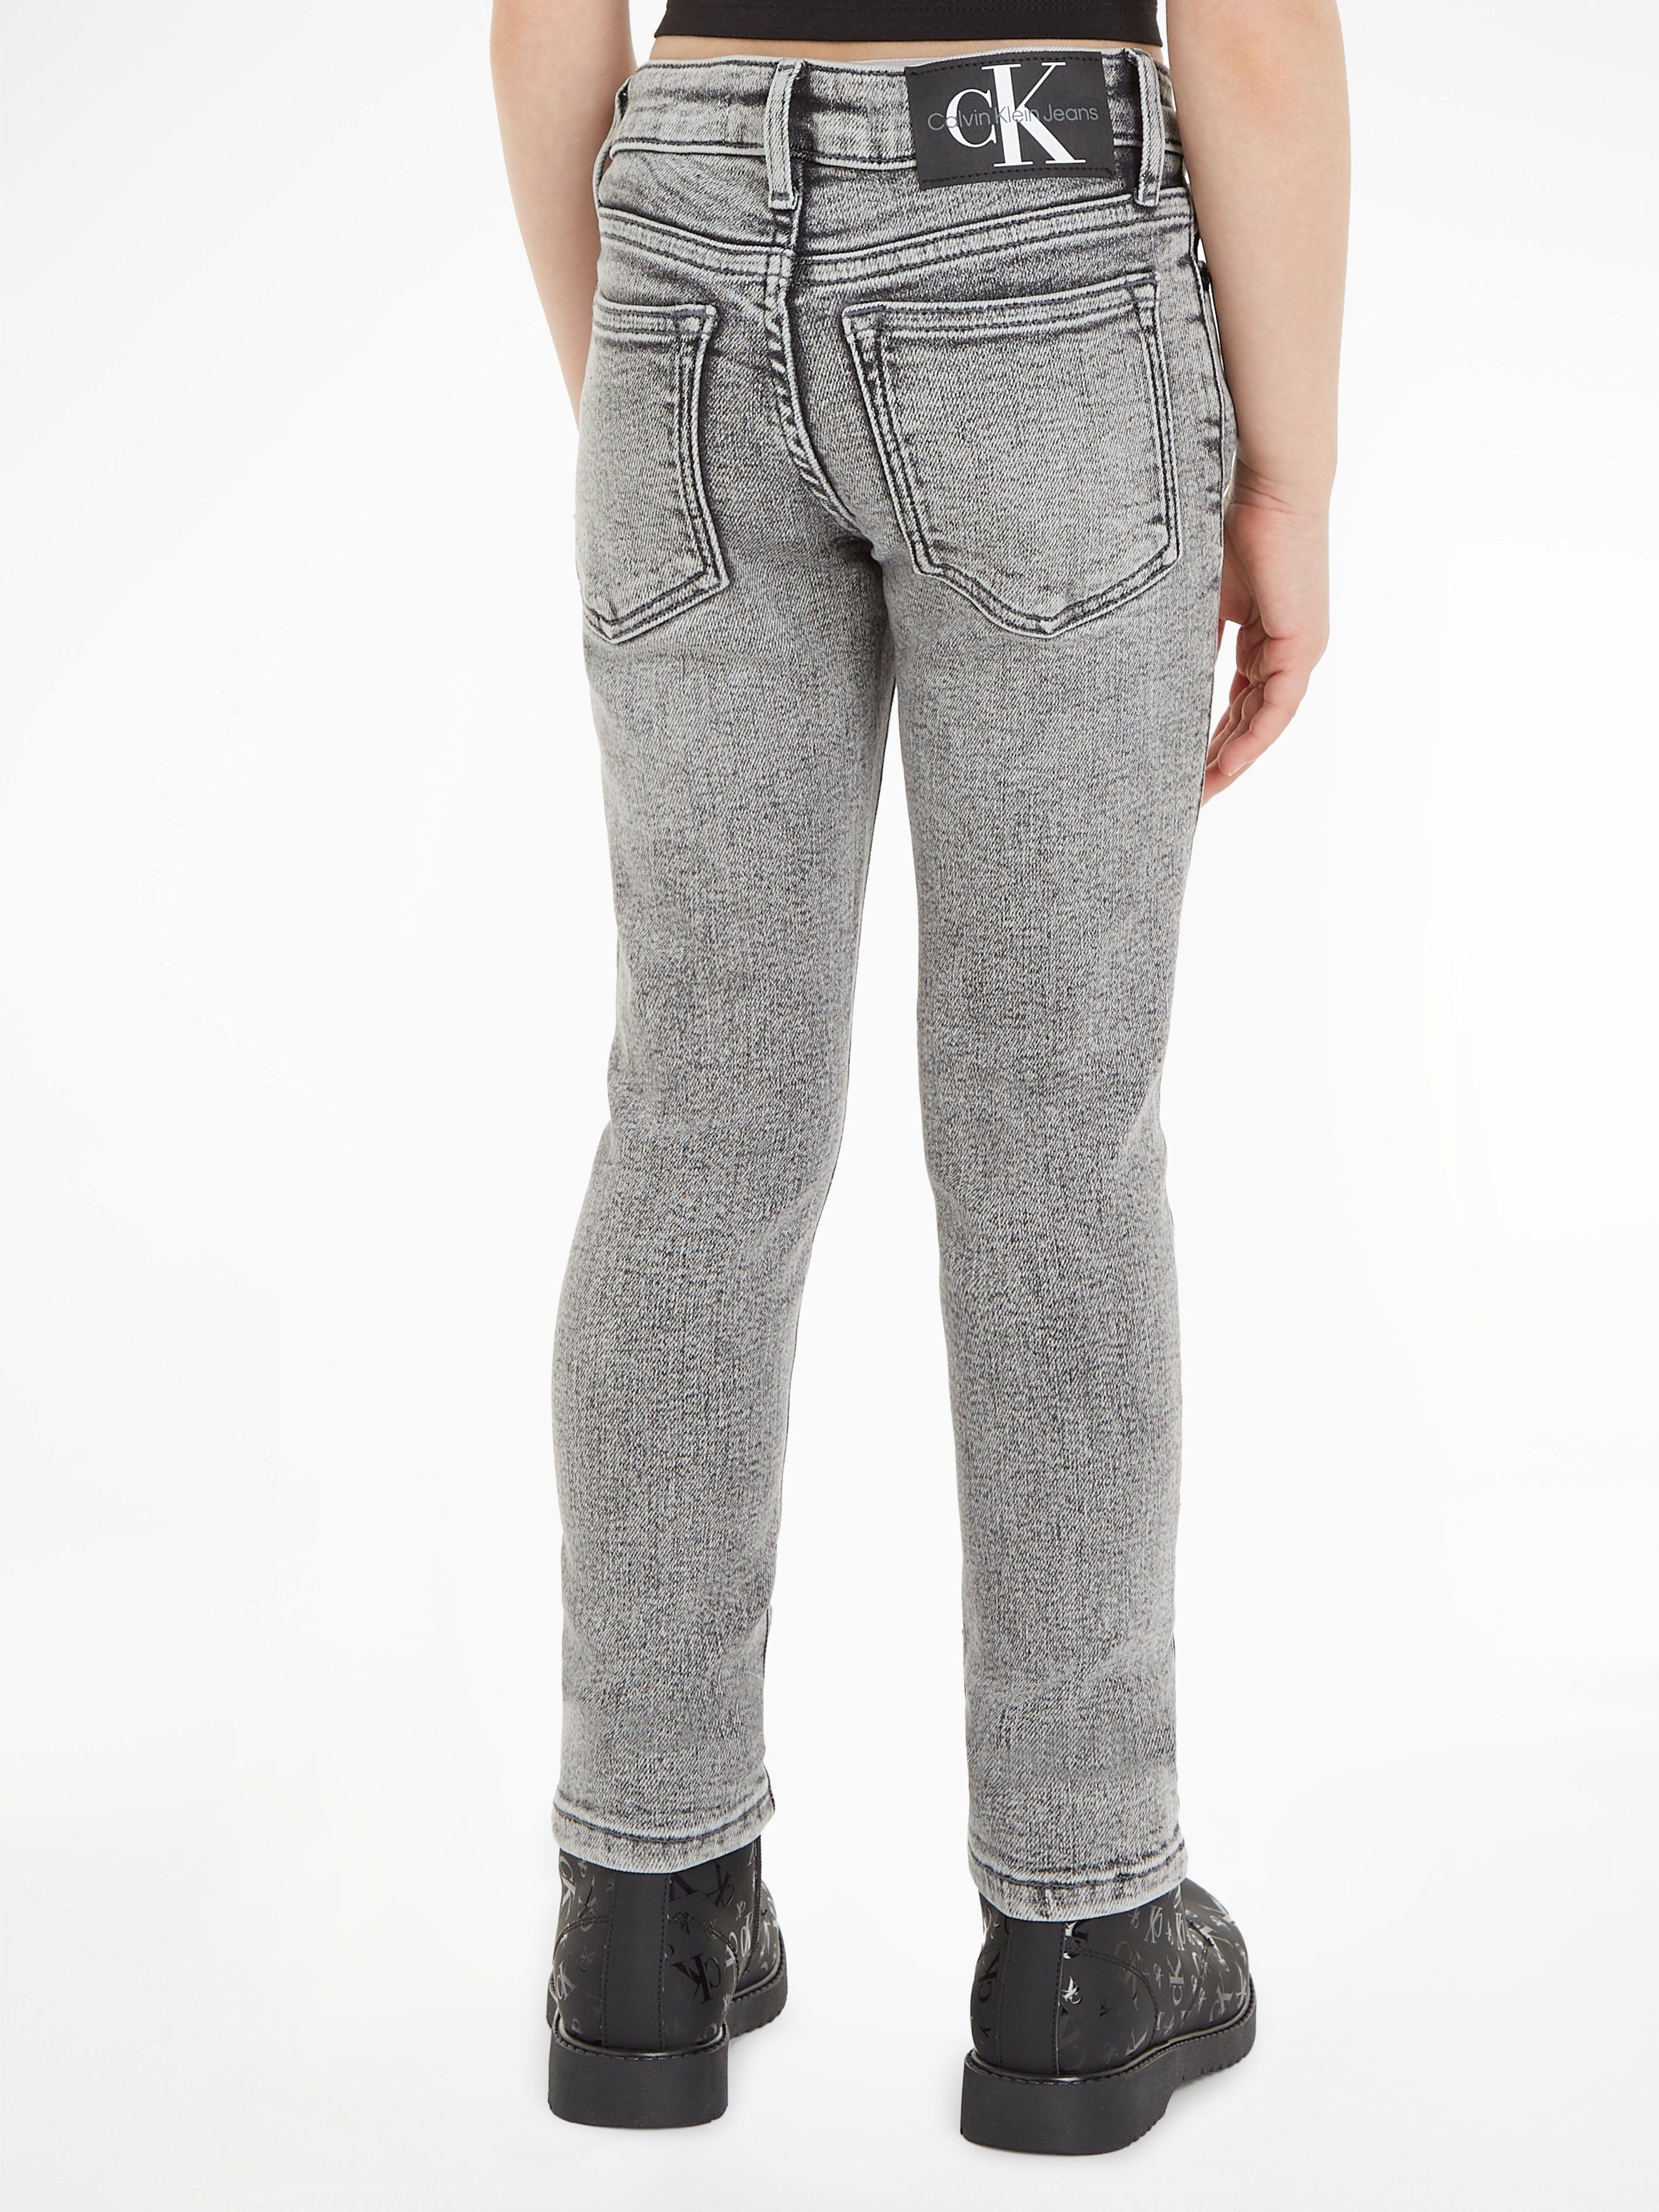 MR Klein SKINNY WASHED GREY Stretch-Jeans Calvin Jeans